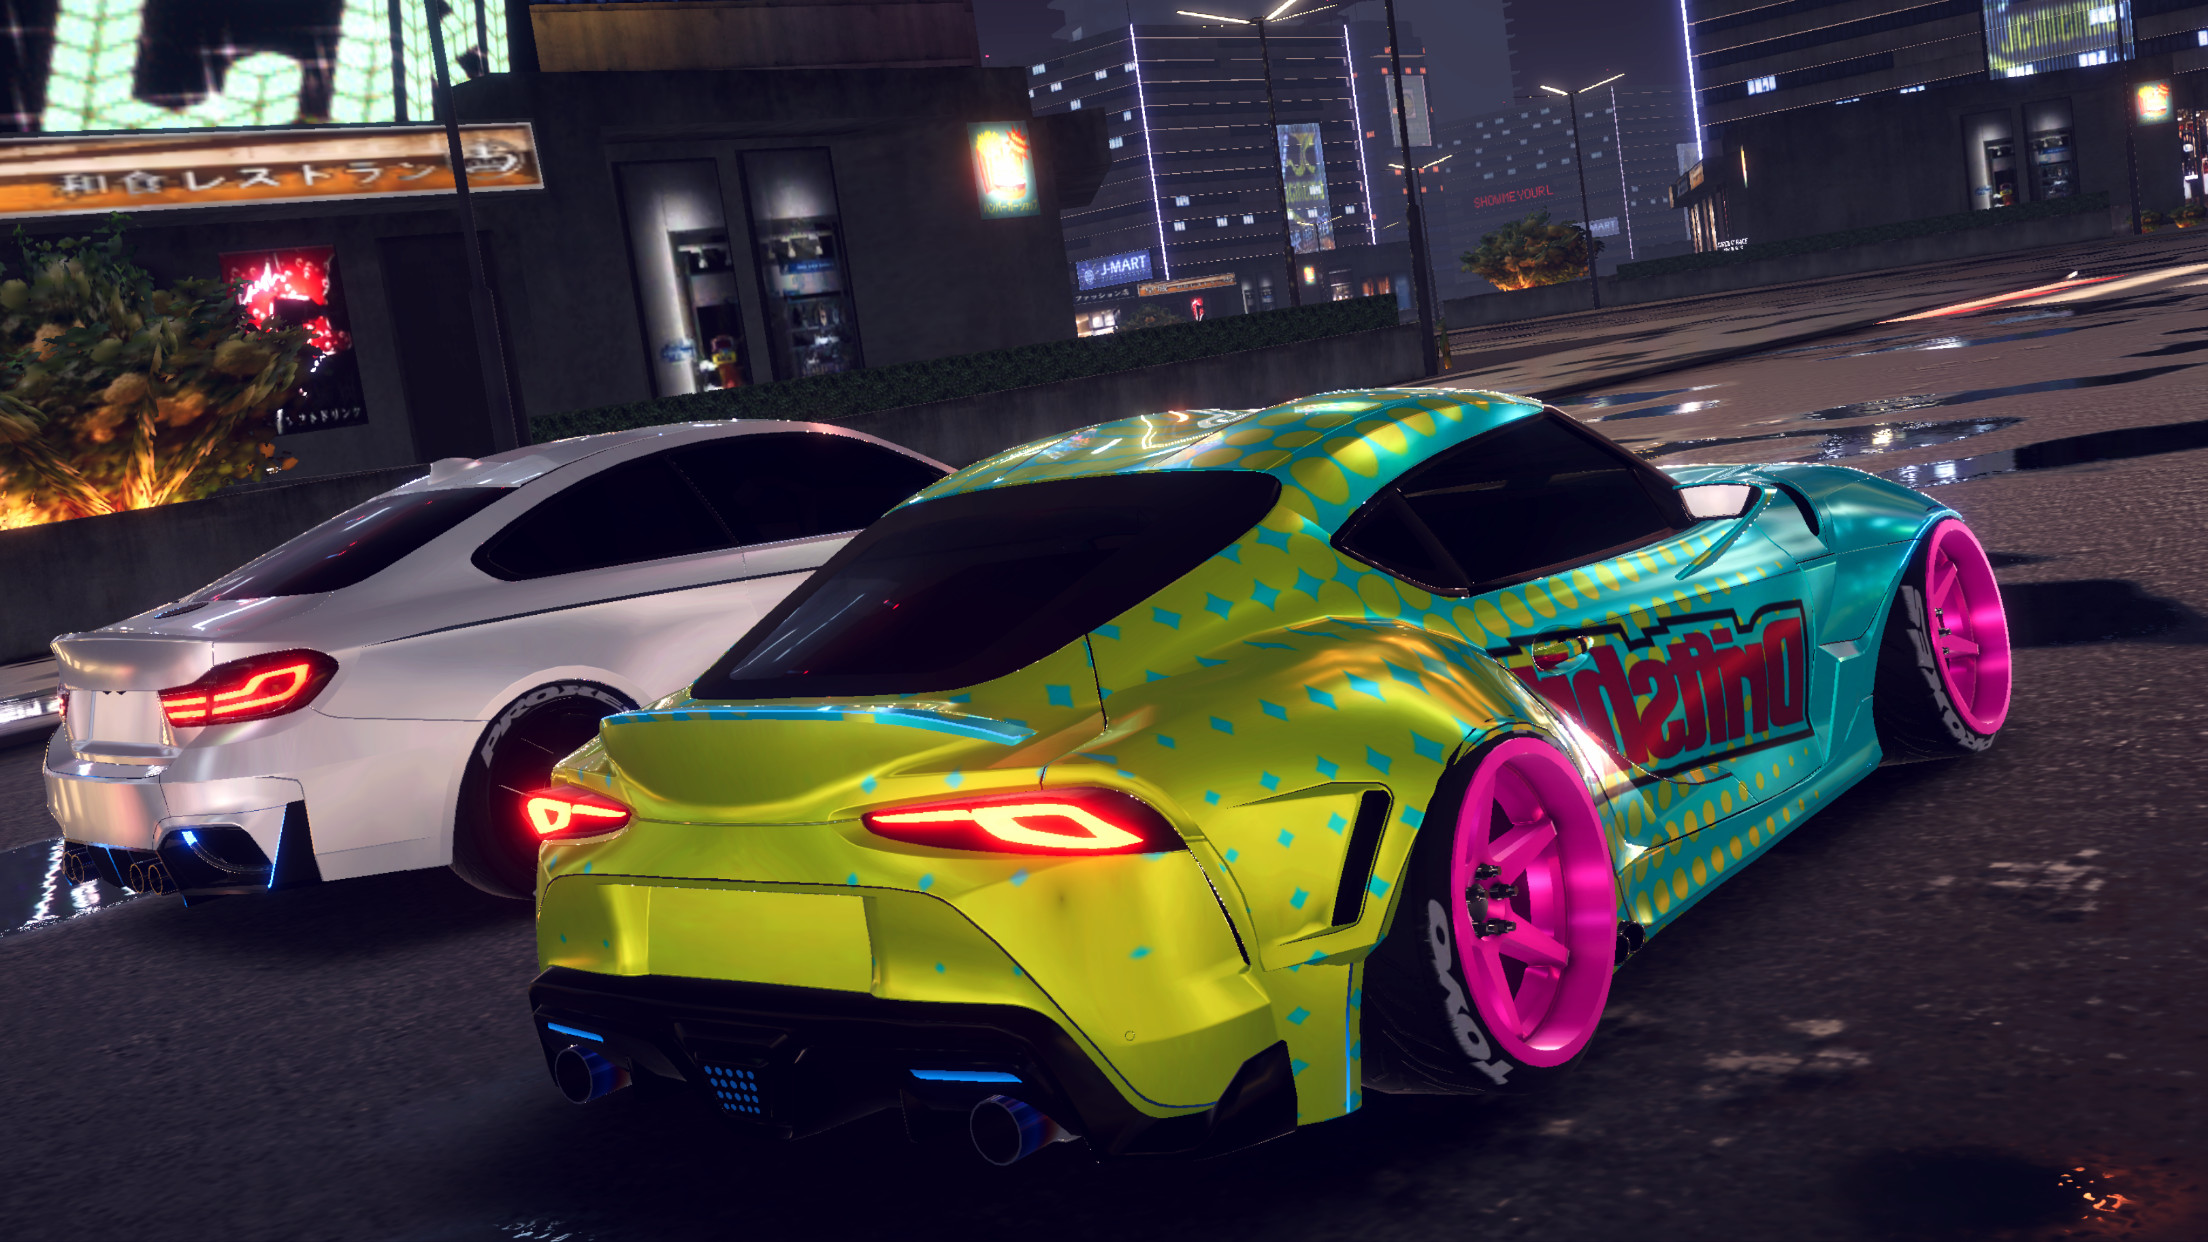 Need for Drive - Open World Multiplayer Racing screenshot